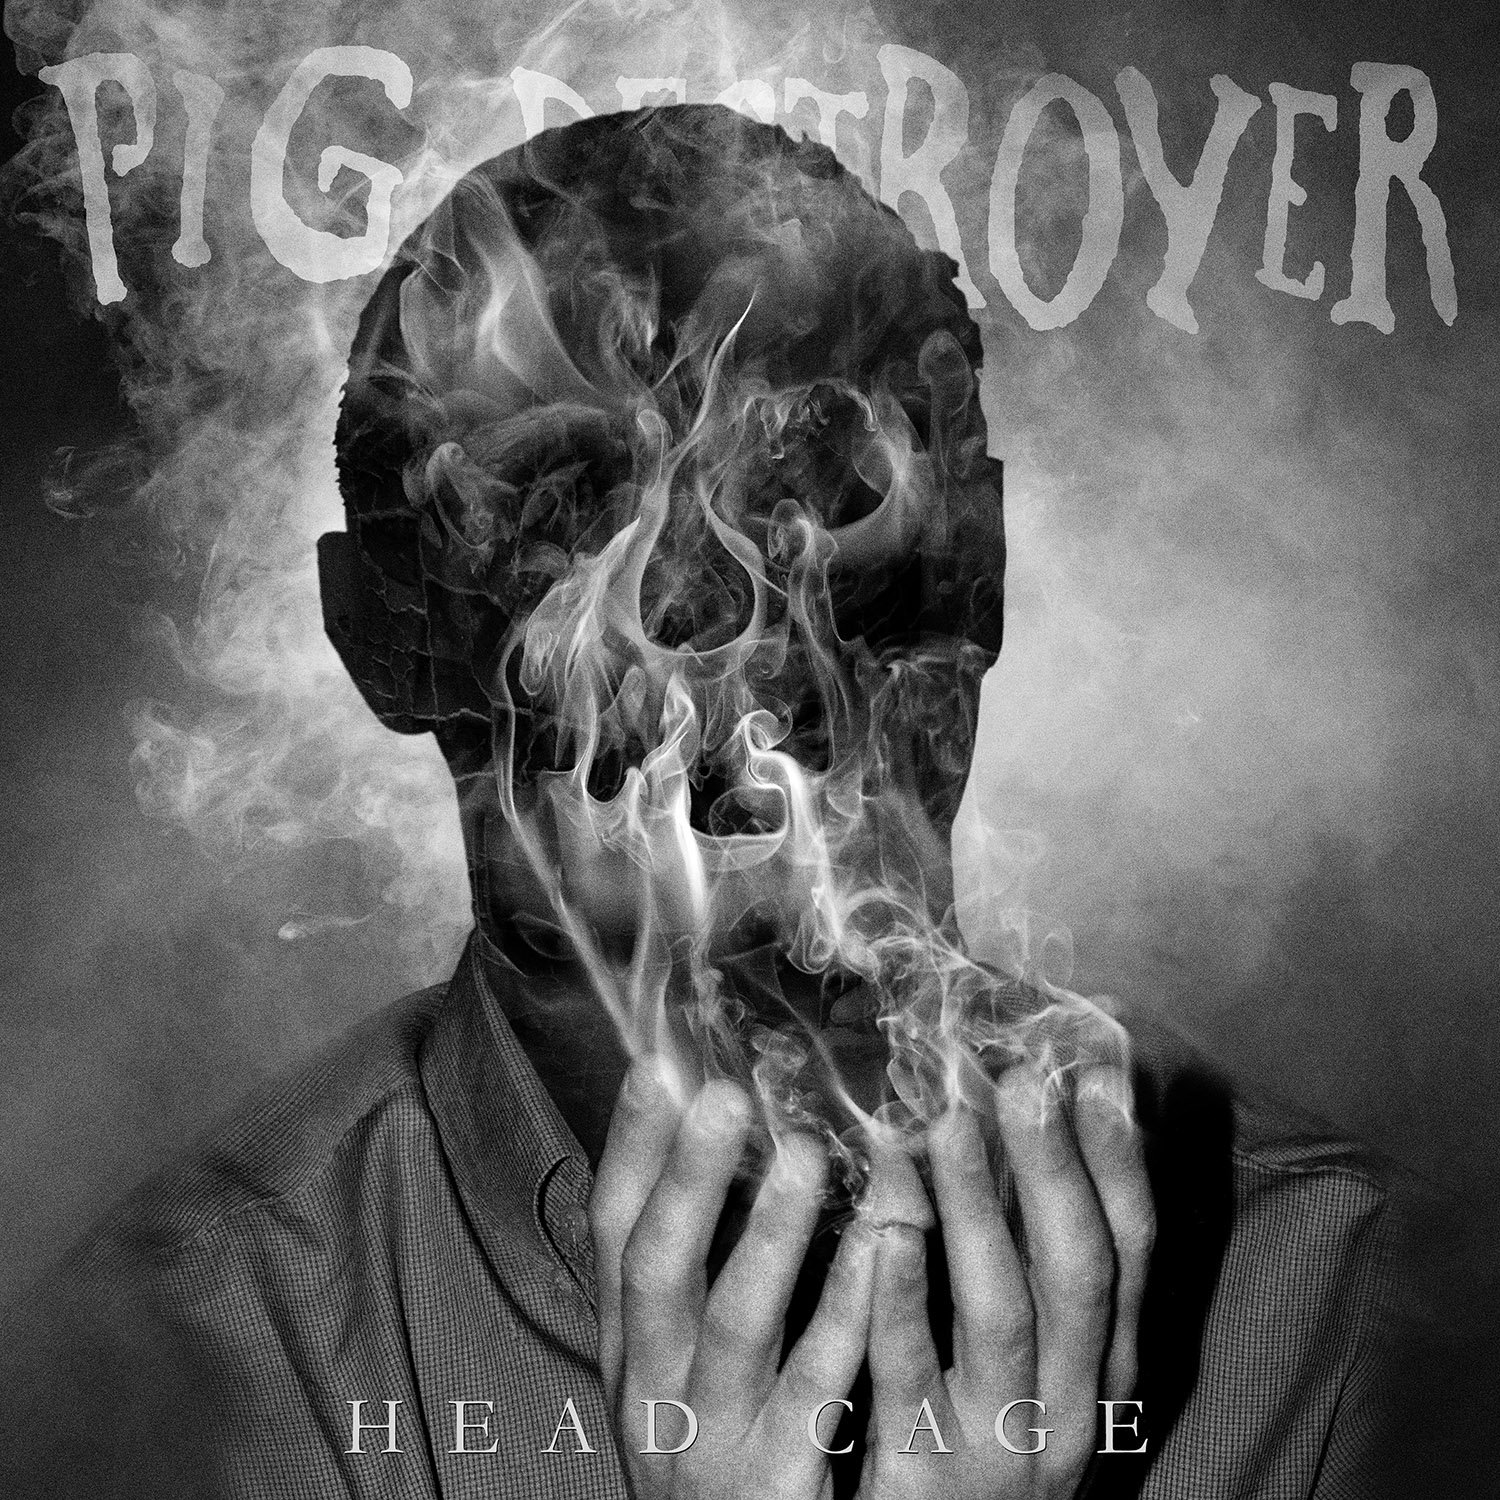 Pig Destroyer – “Head Cage”